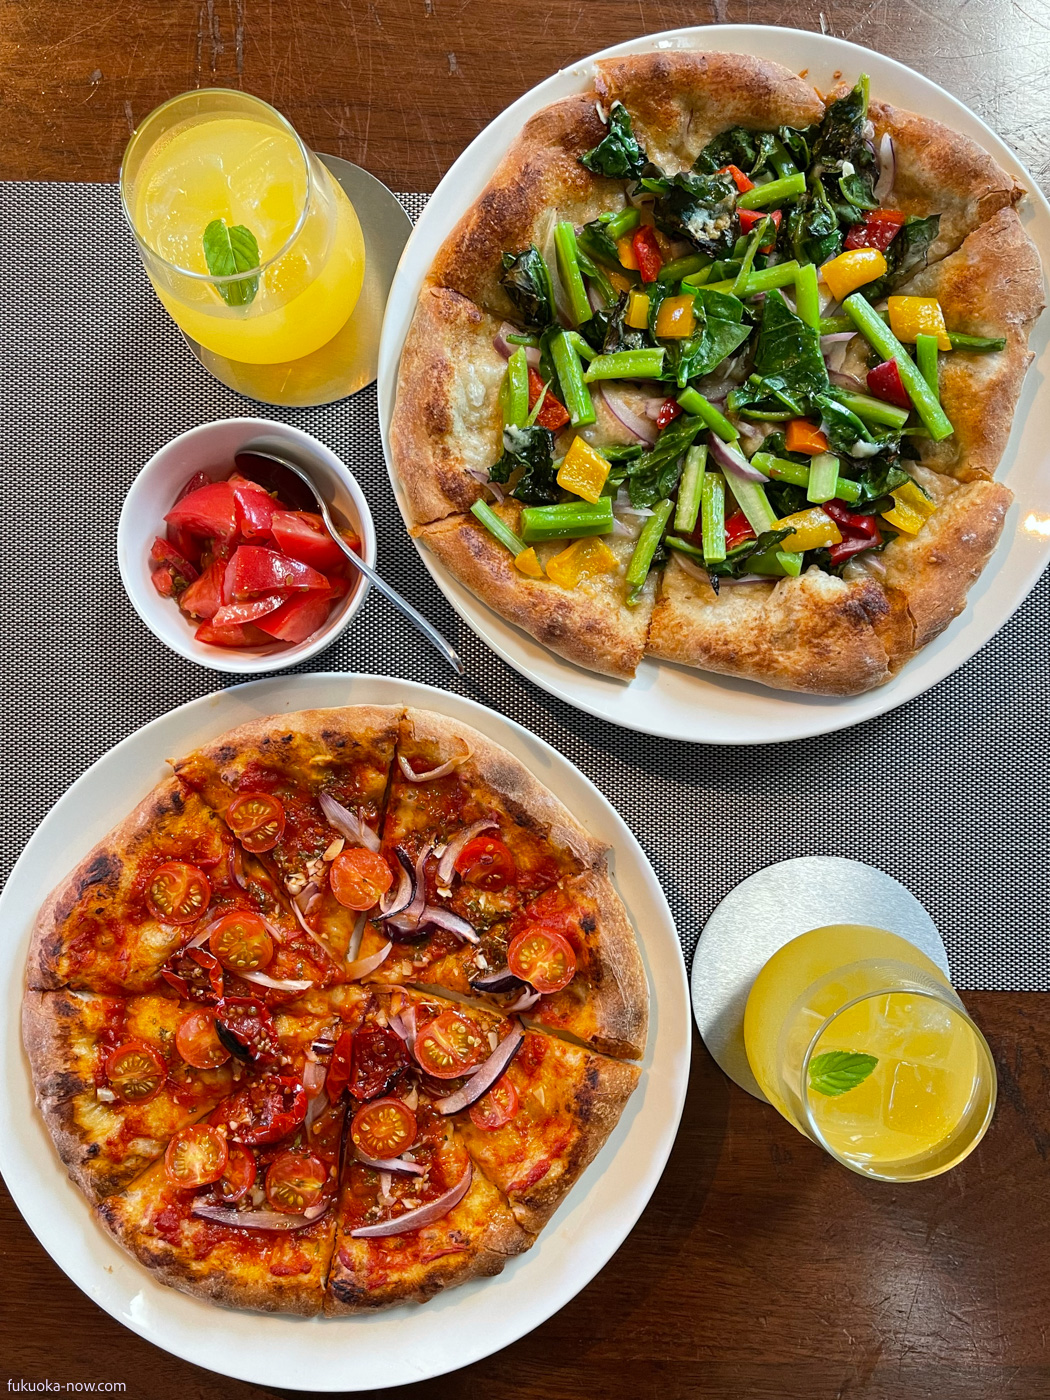  itoshima organic veges cafe rita pizza, 糸島わかまつ農園のオーガニック野菜のピザ